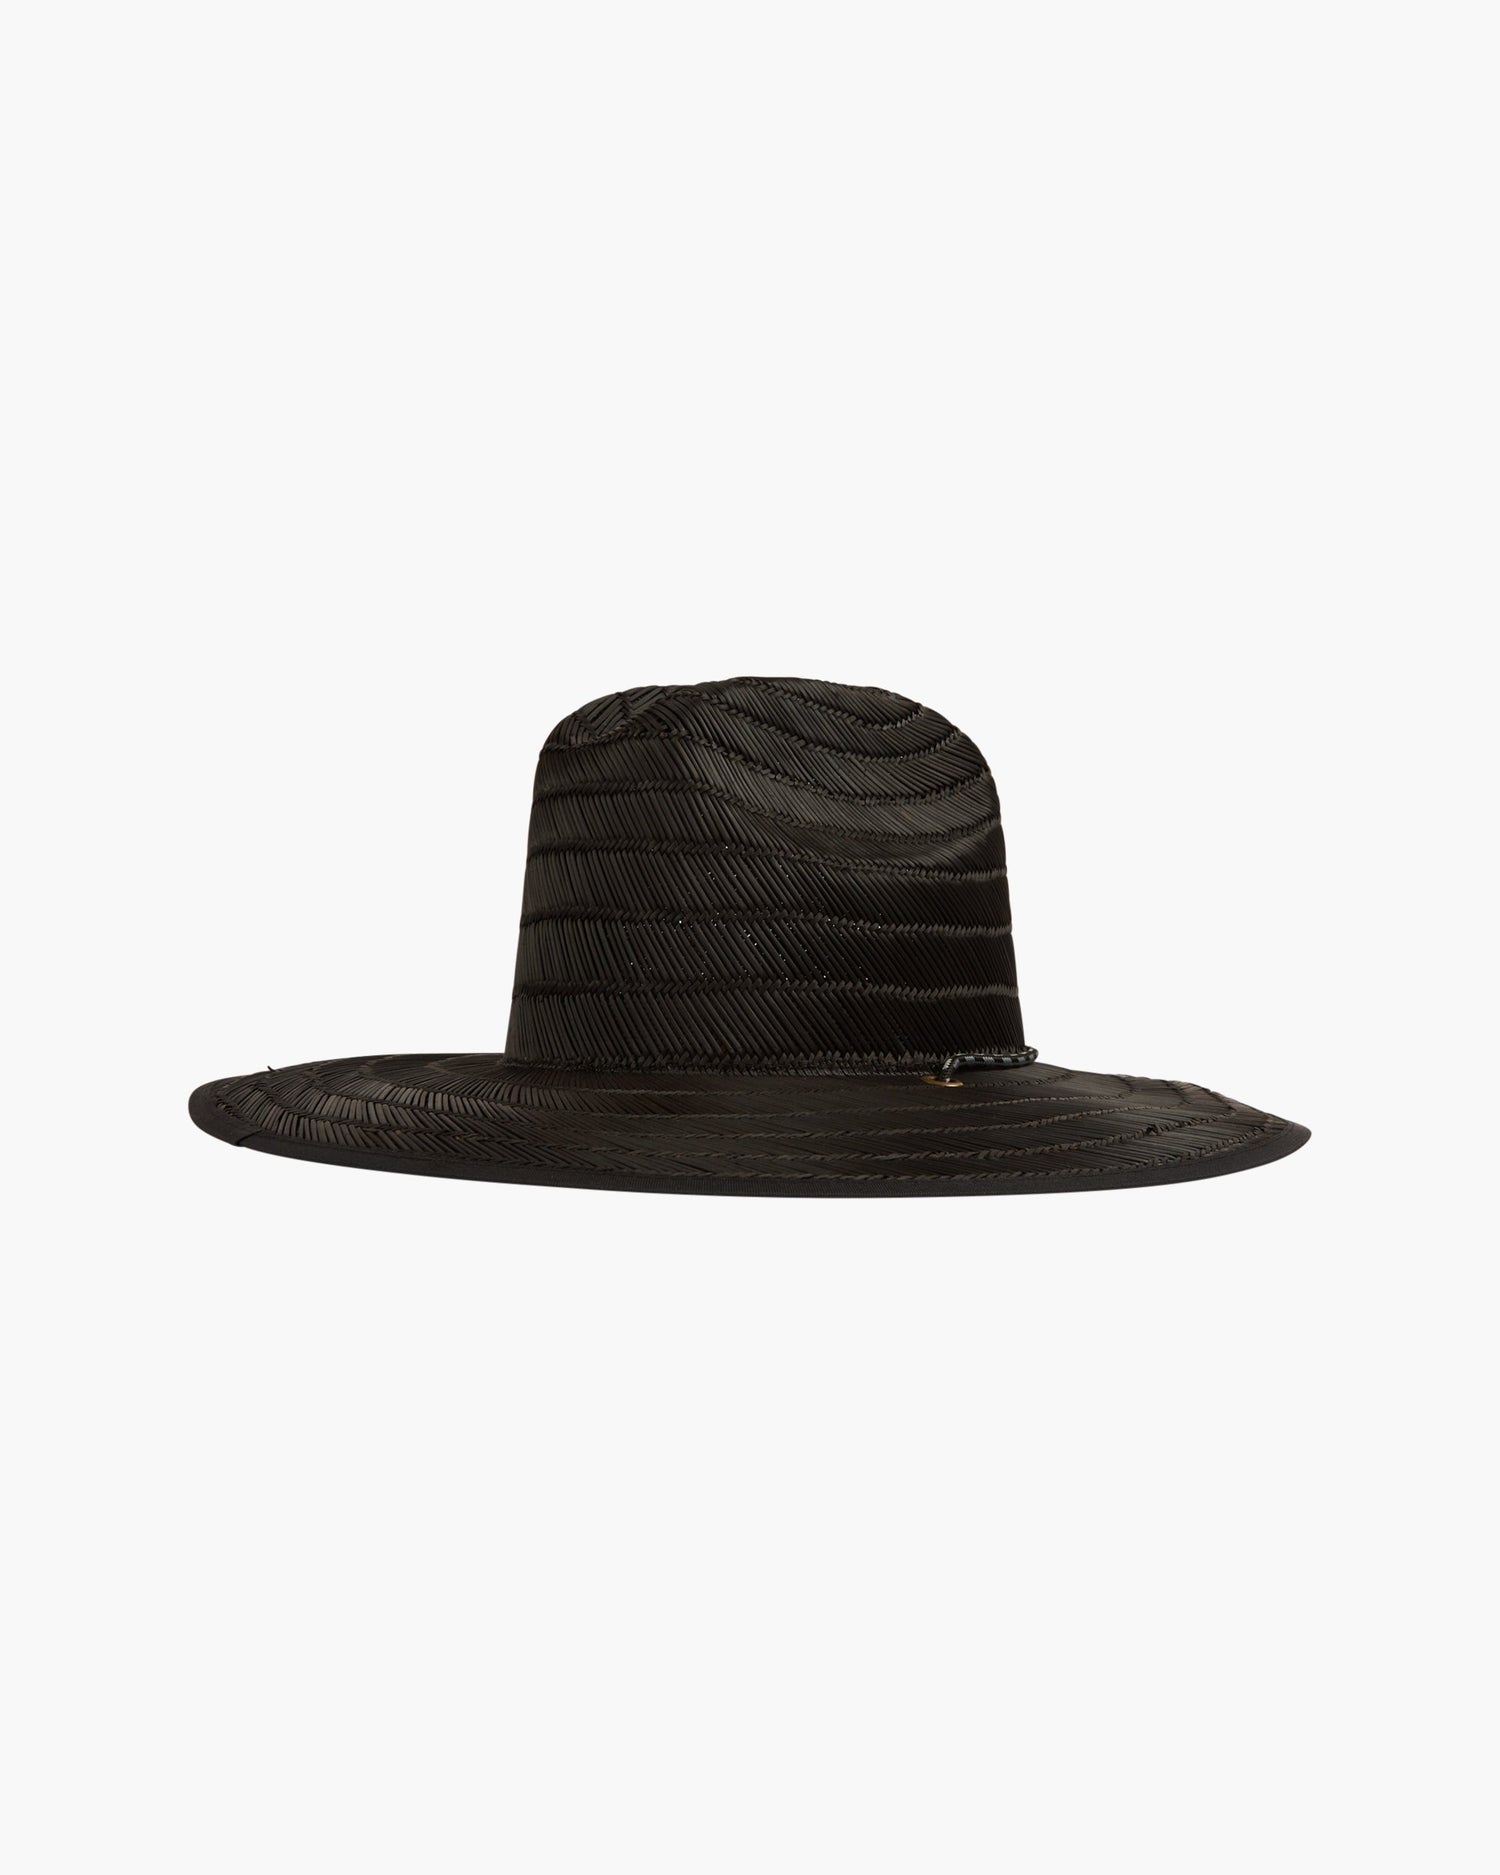 TIPPET LIFEGUARD HAT - Black